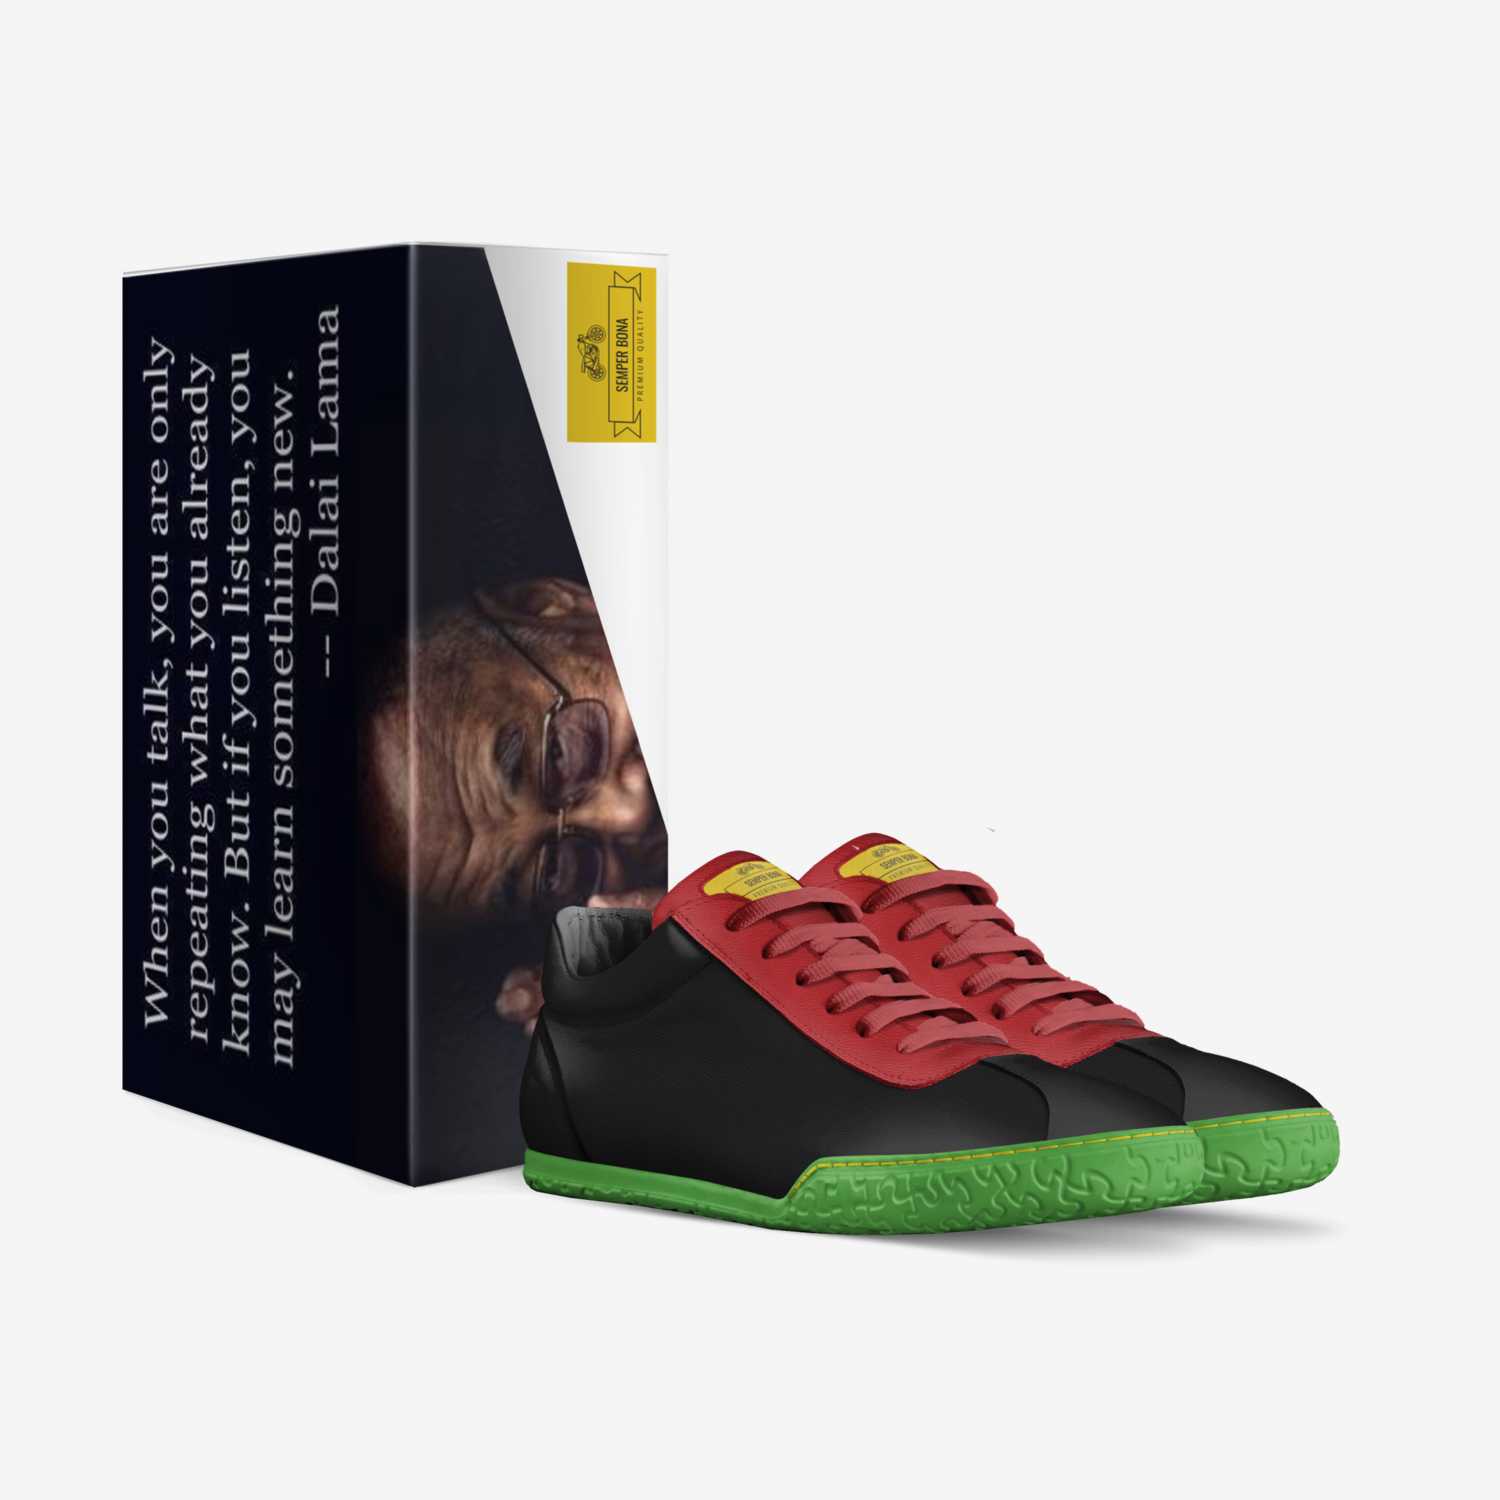 Semper Bona custom made in Italy shoes by Lynn J Willocks | Box view